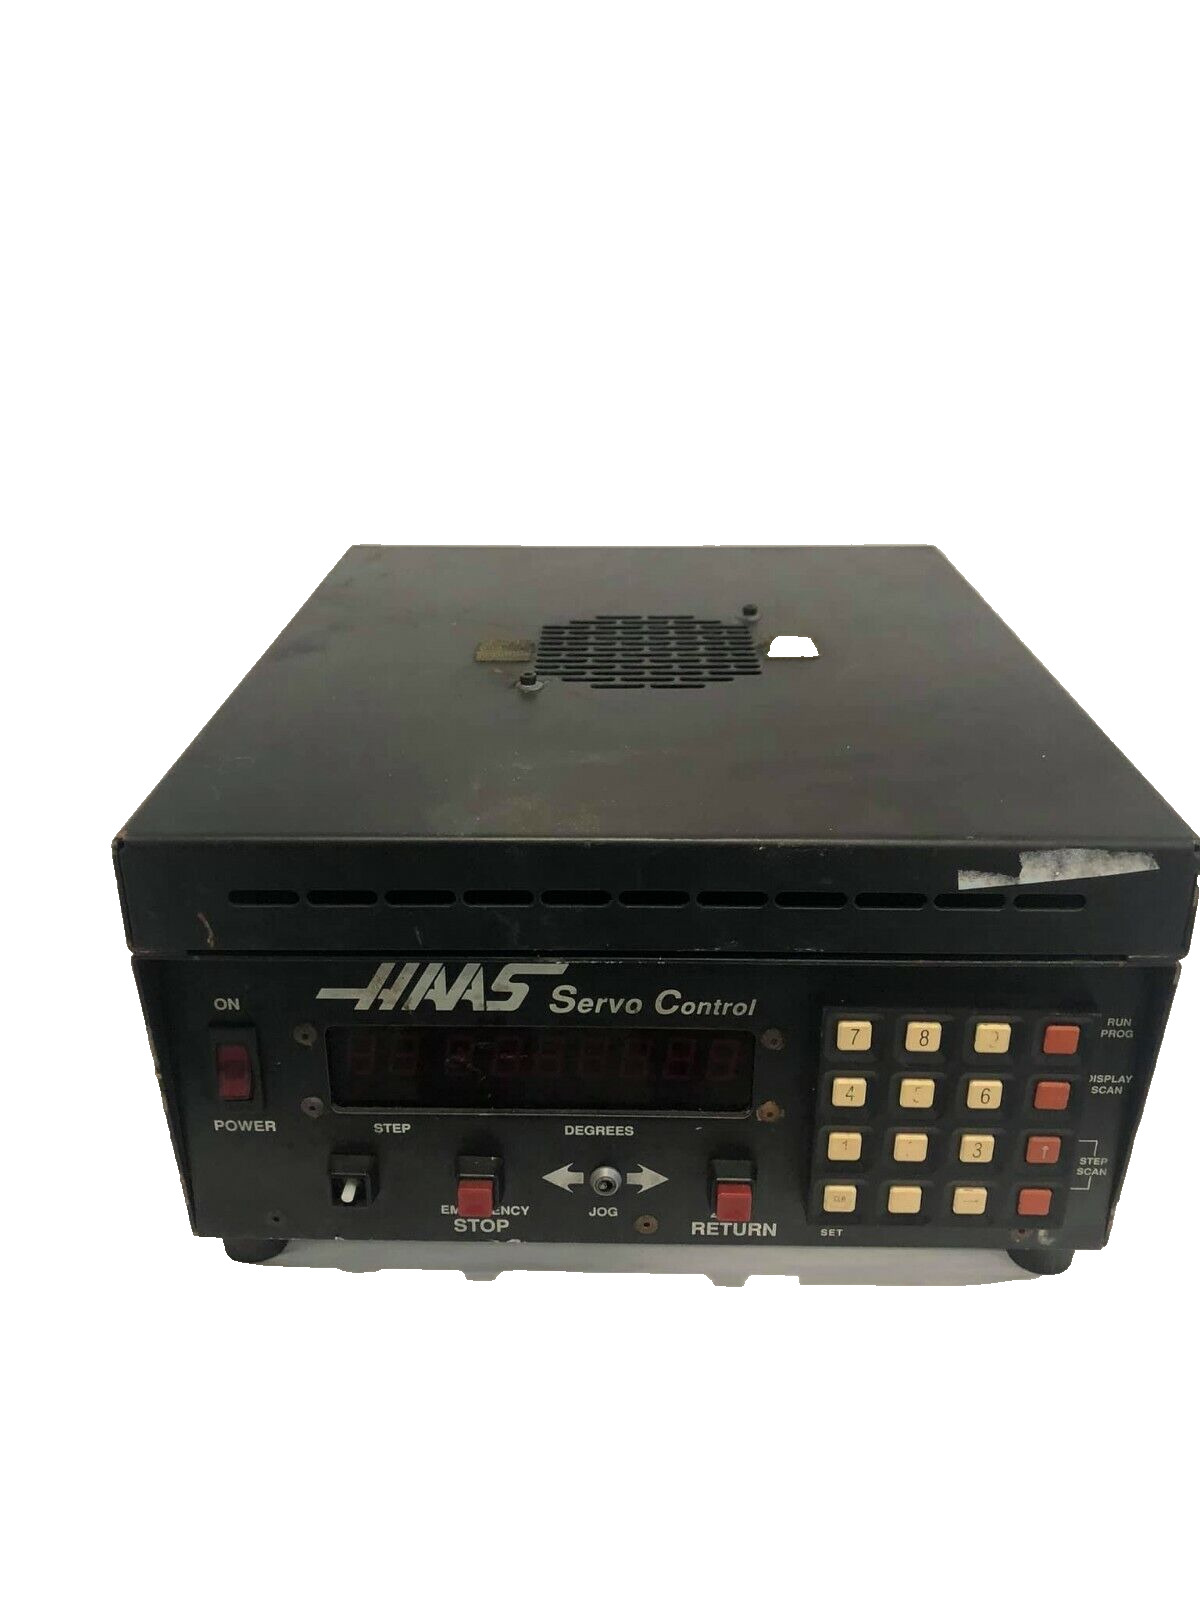 HAAS Servo Controller , Model S5C.as-is